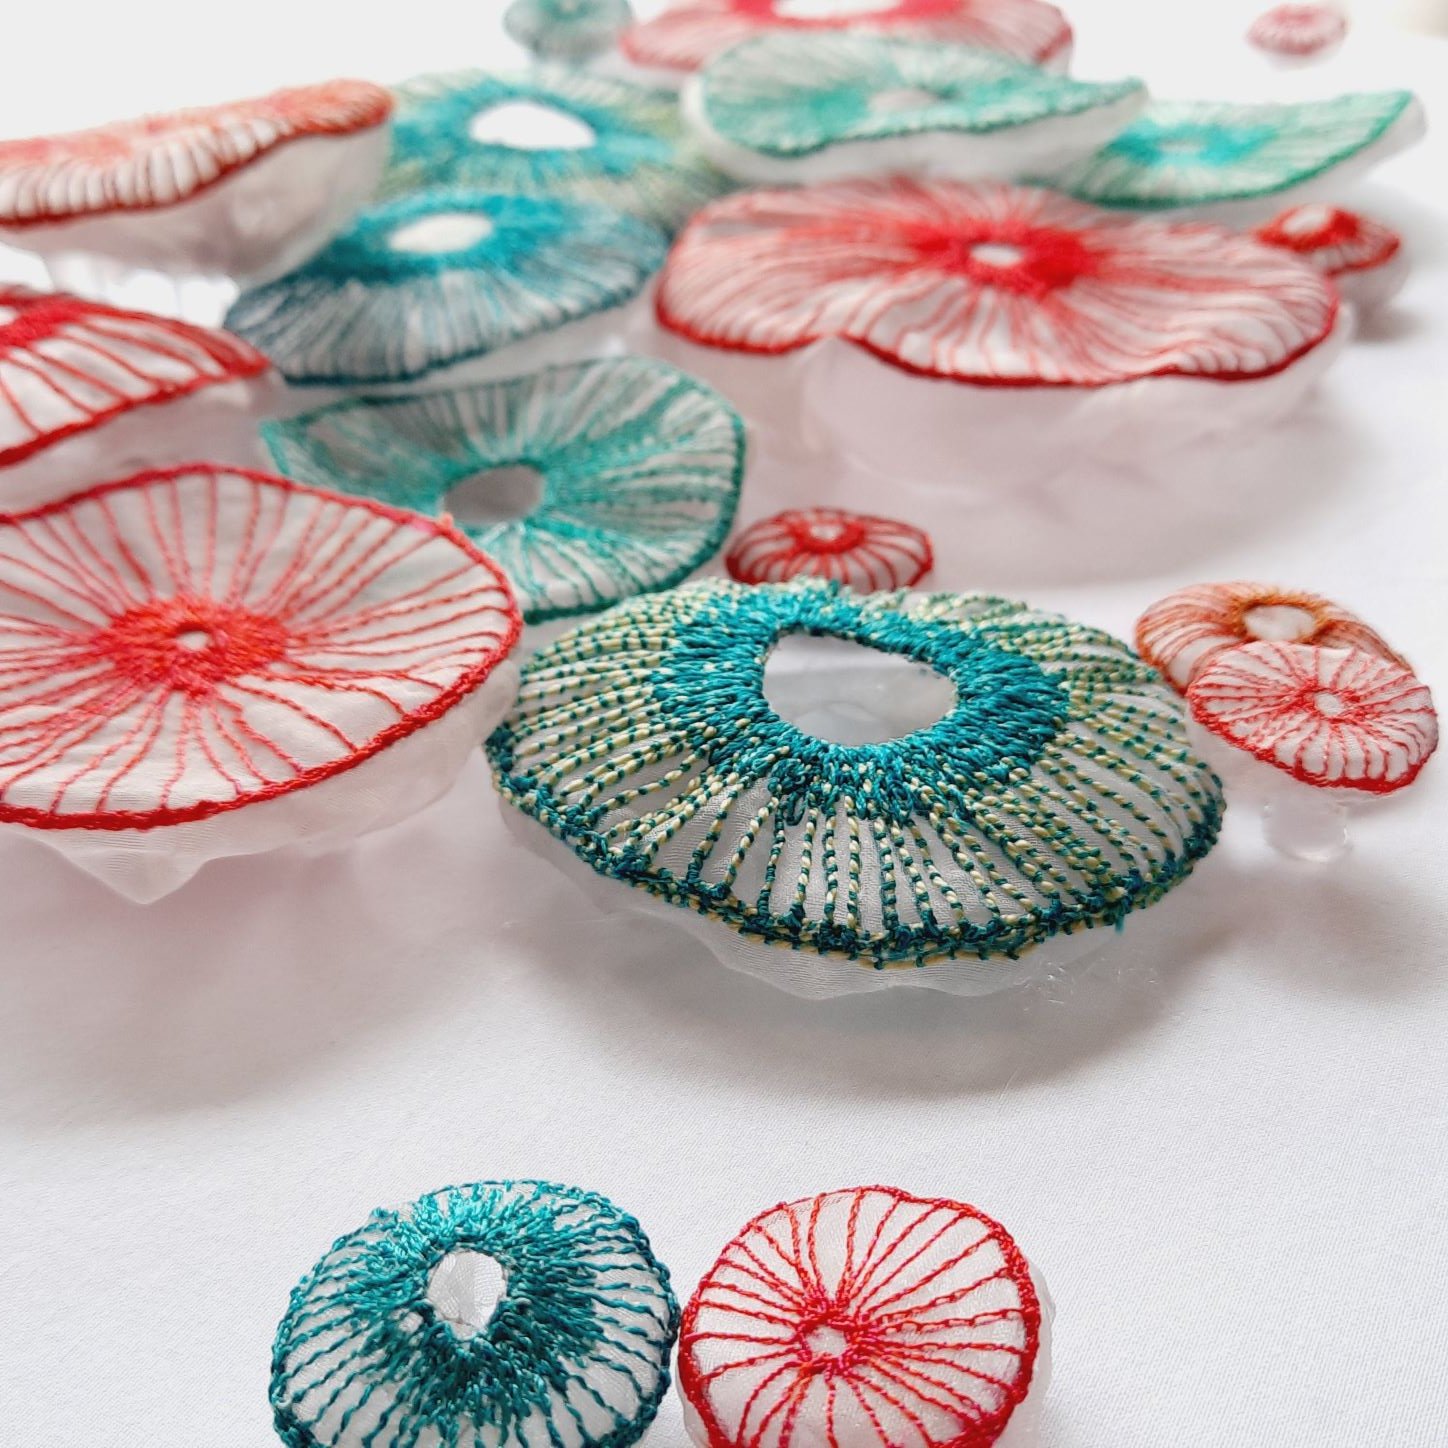 Textile coral sculptures by Agatha Lee 'Agy'